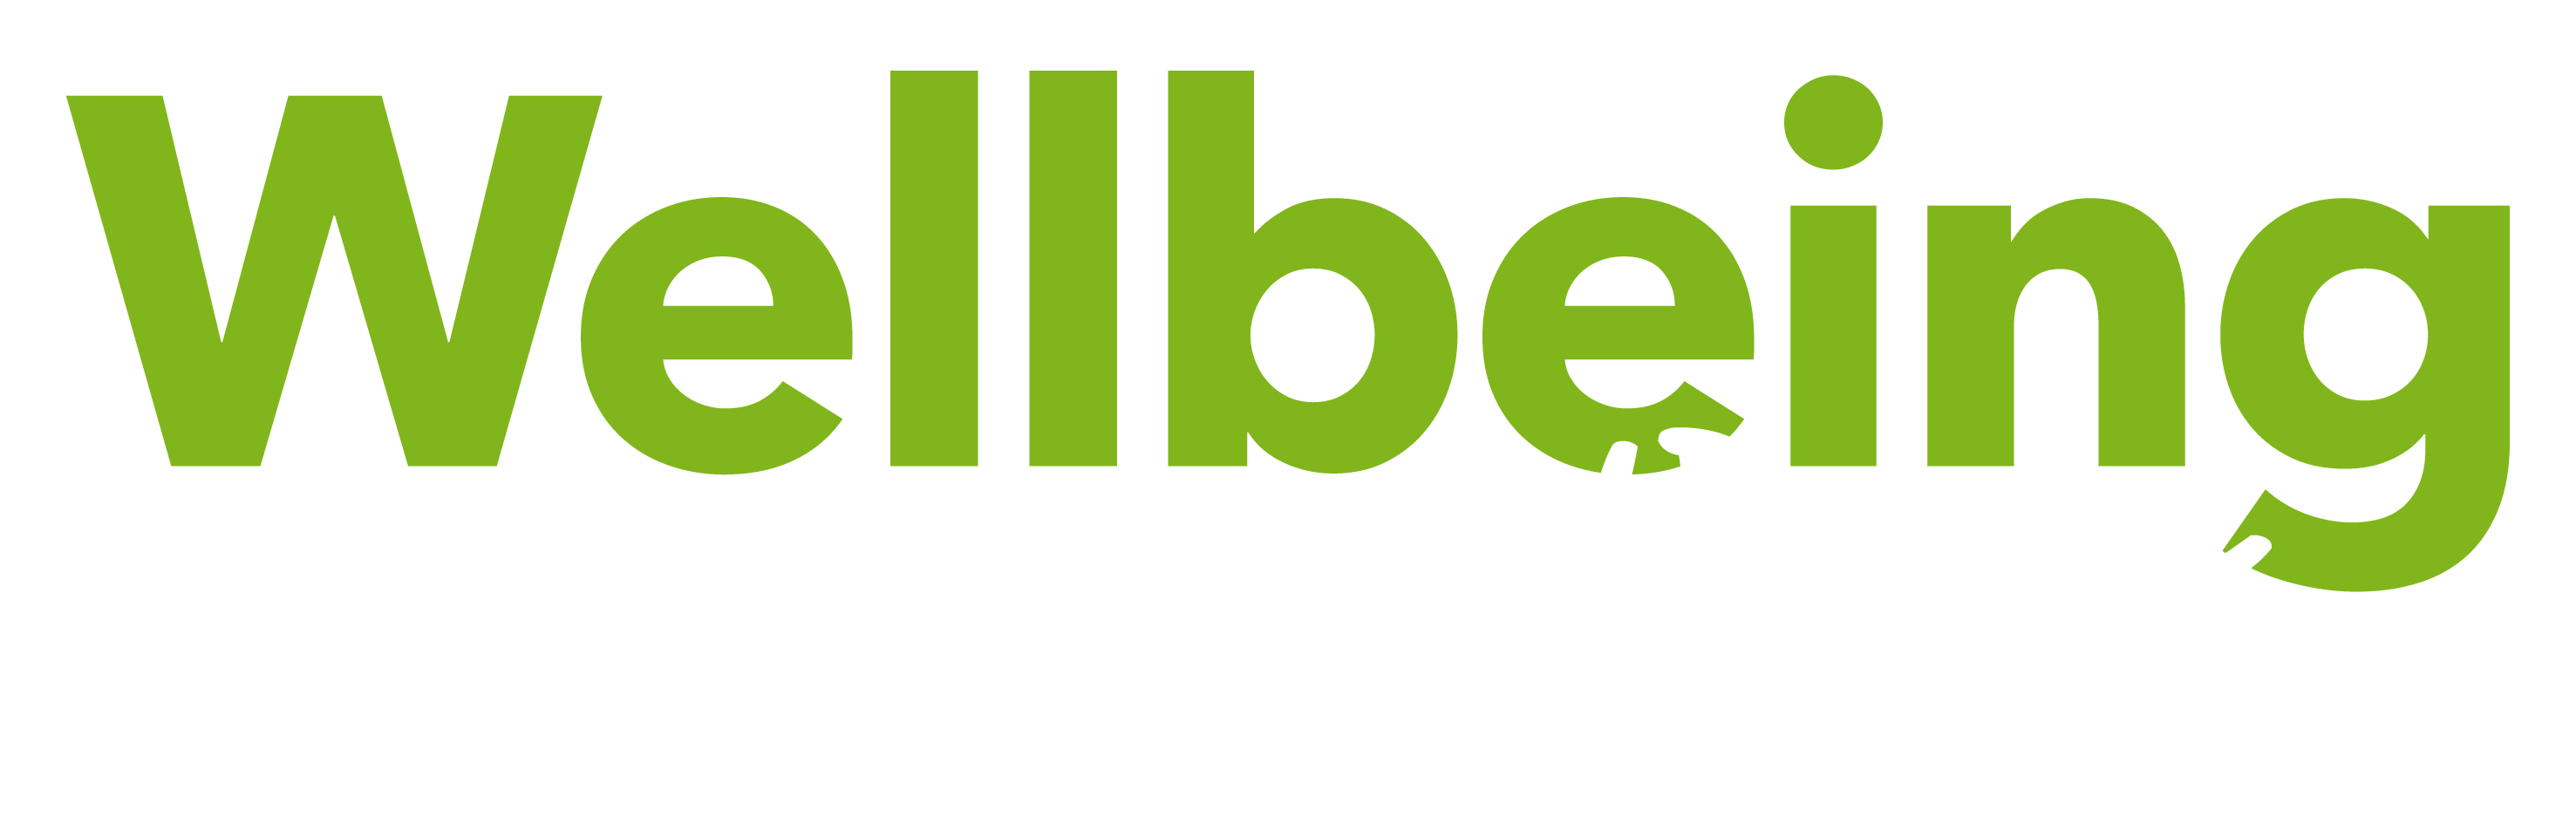 Wellbeing Playbook logo